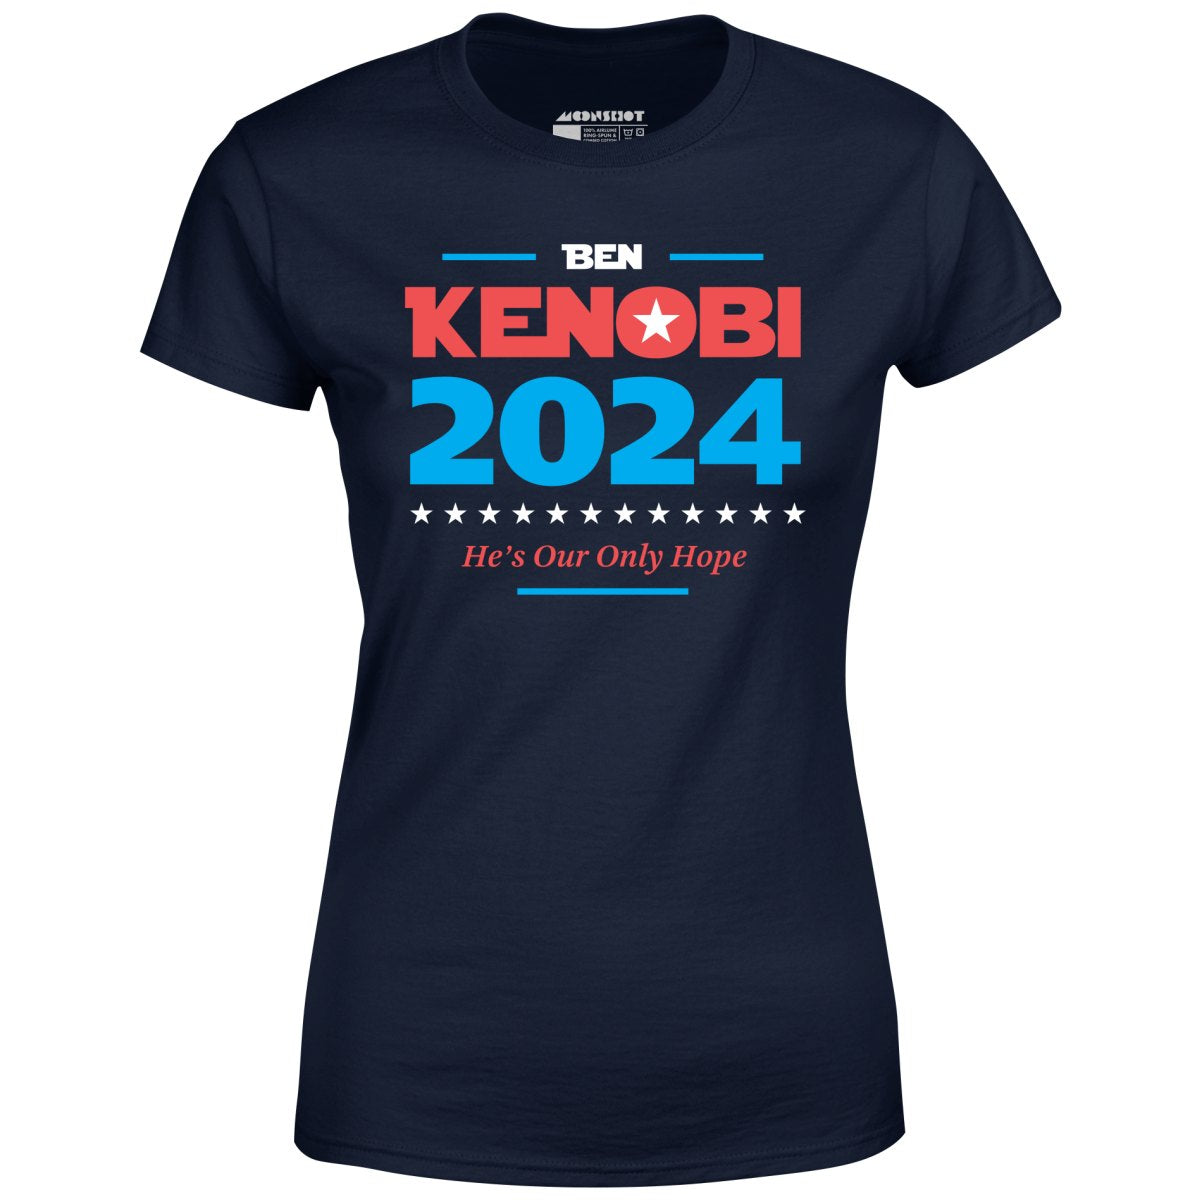 Ben Kenobi 2024 - Women's T-Shirt